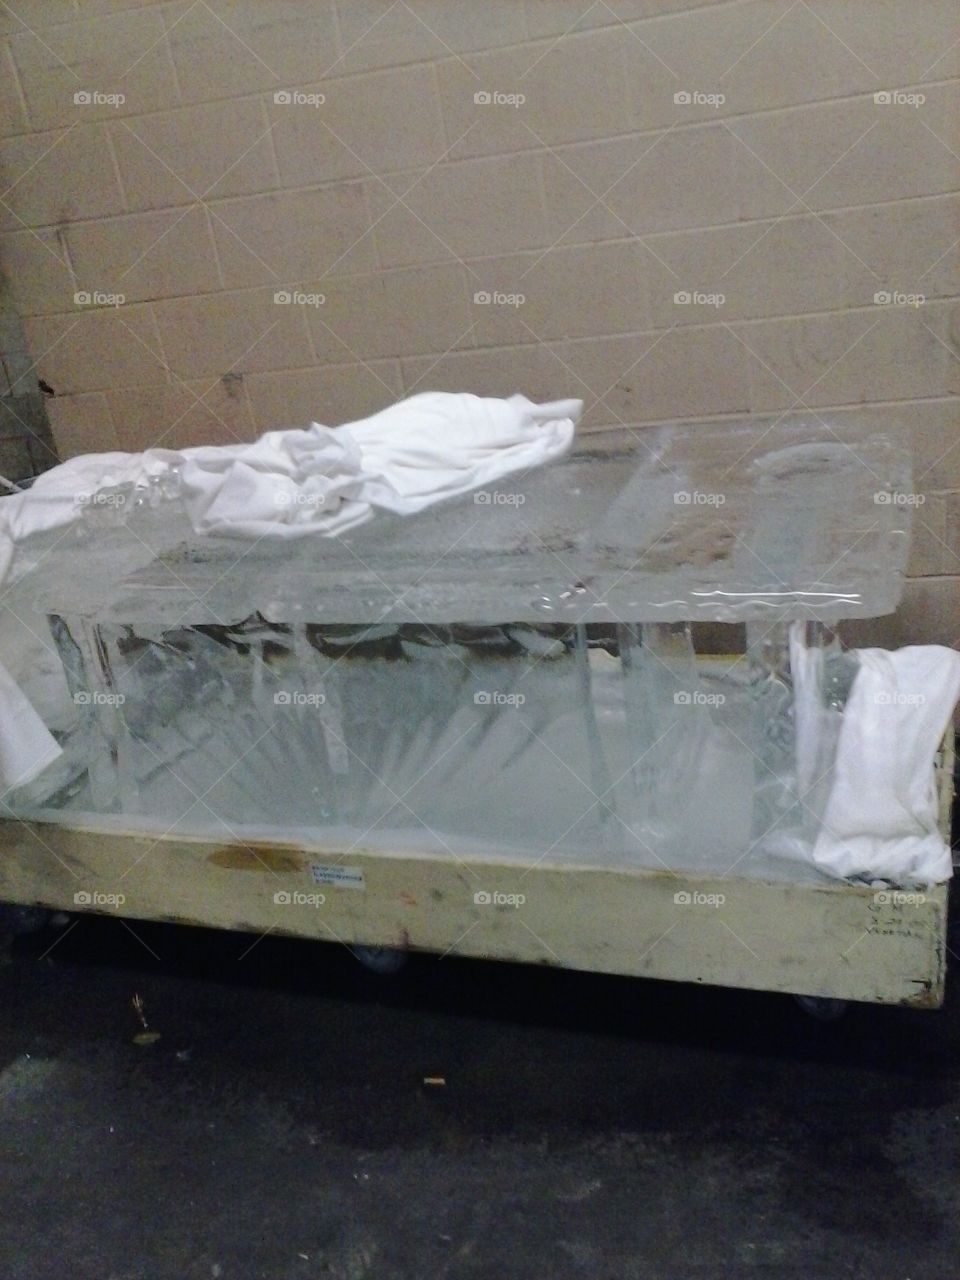 Ice cube 